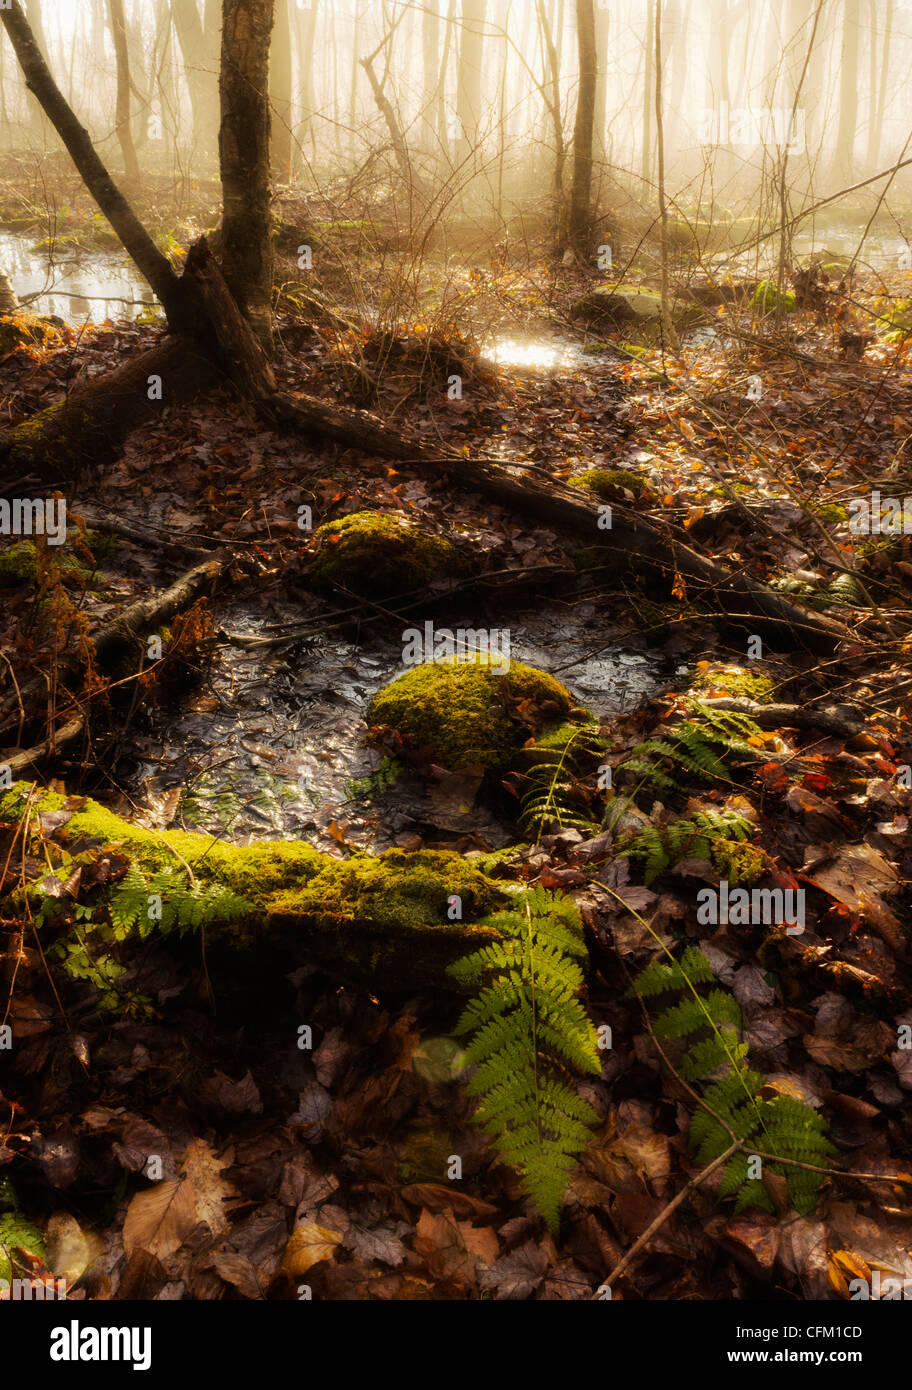 USA, Pennsylvania, Poconos, Scenic view of forest Stock Photo